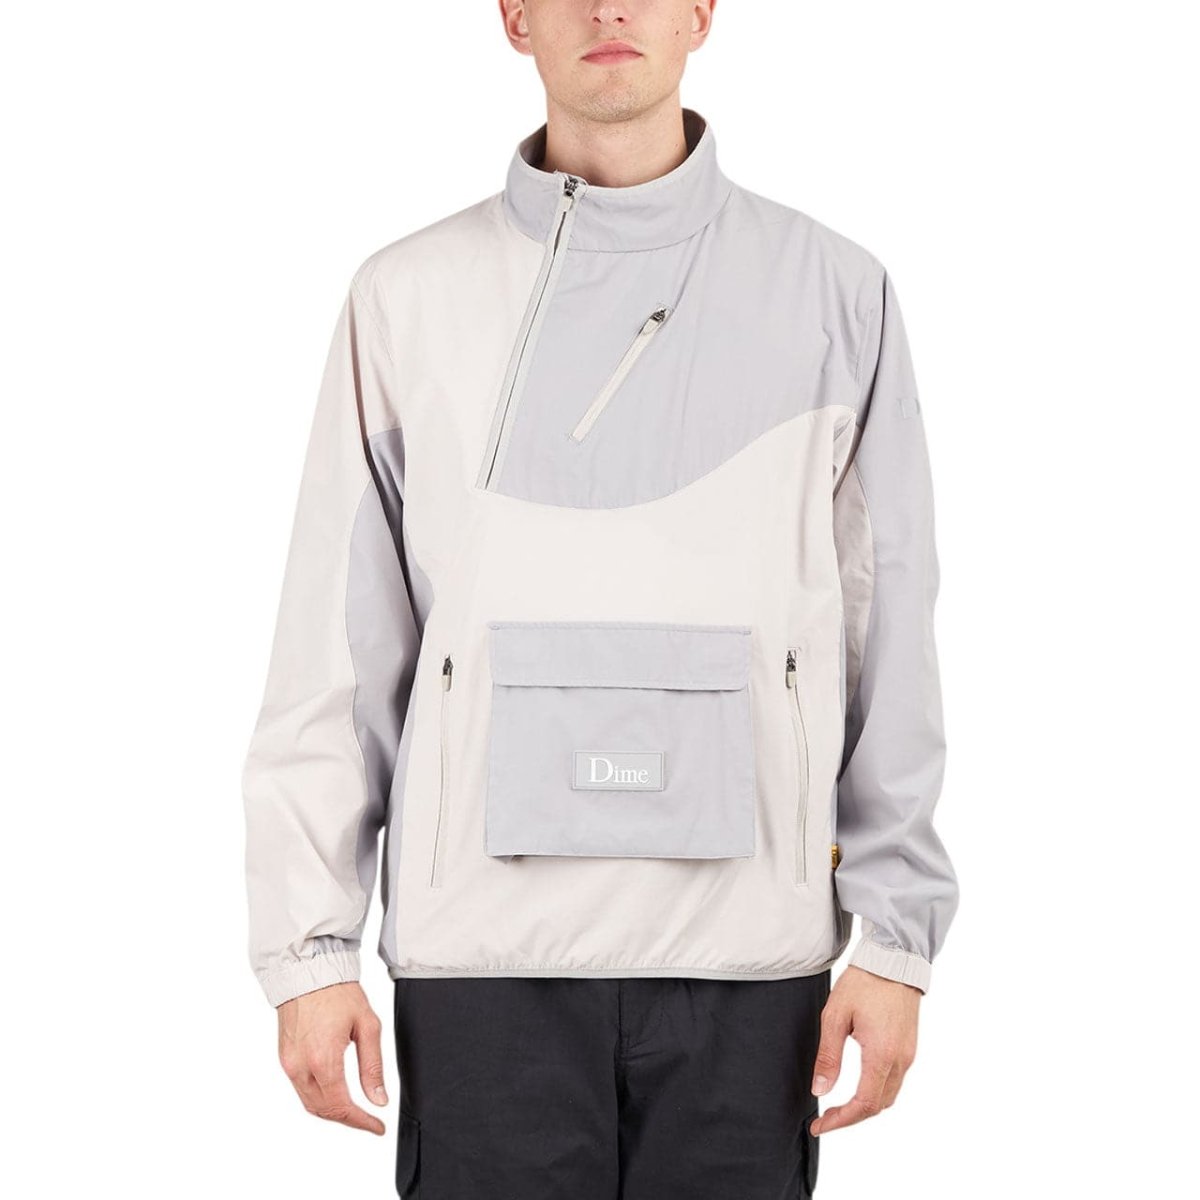 Dime Range Pullover Jacket (Gray)